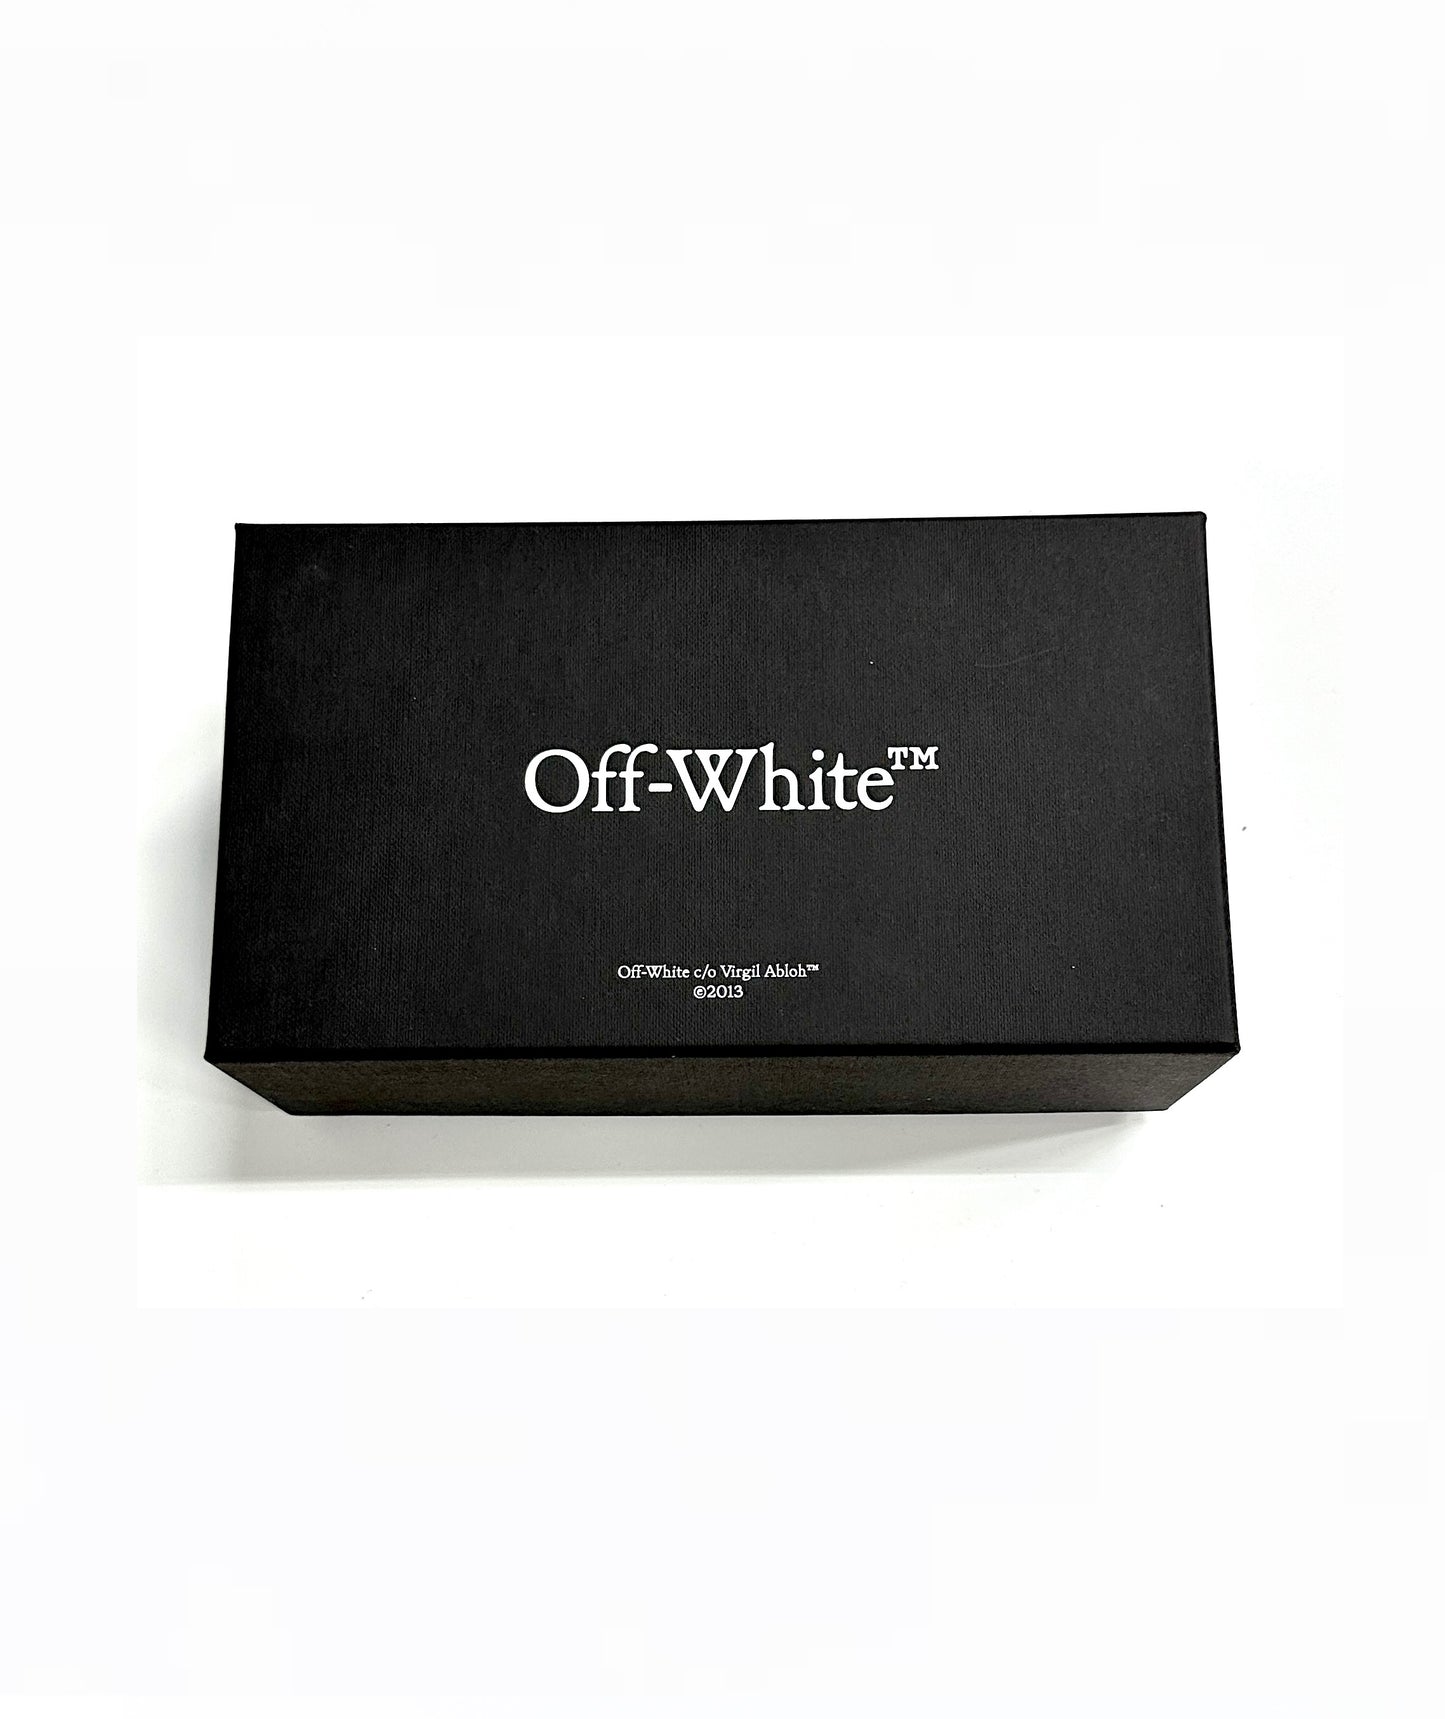 Off-White OERI113S24PLA0011007 52mm New Sunglasses